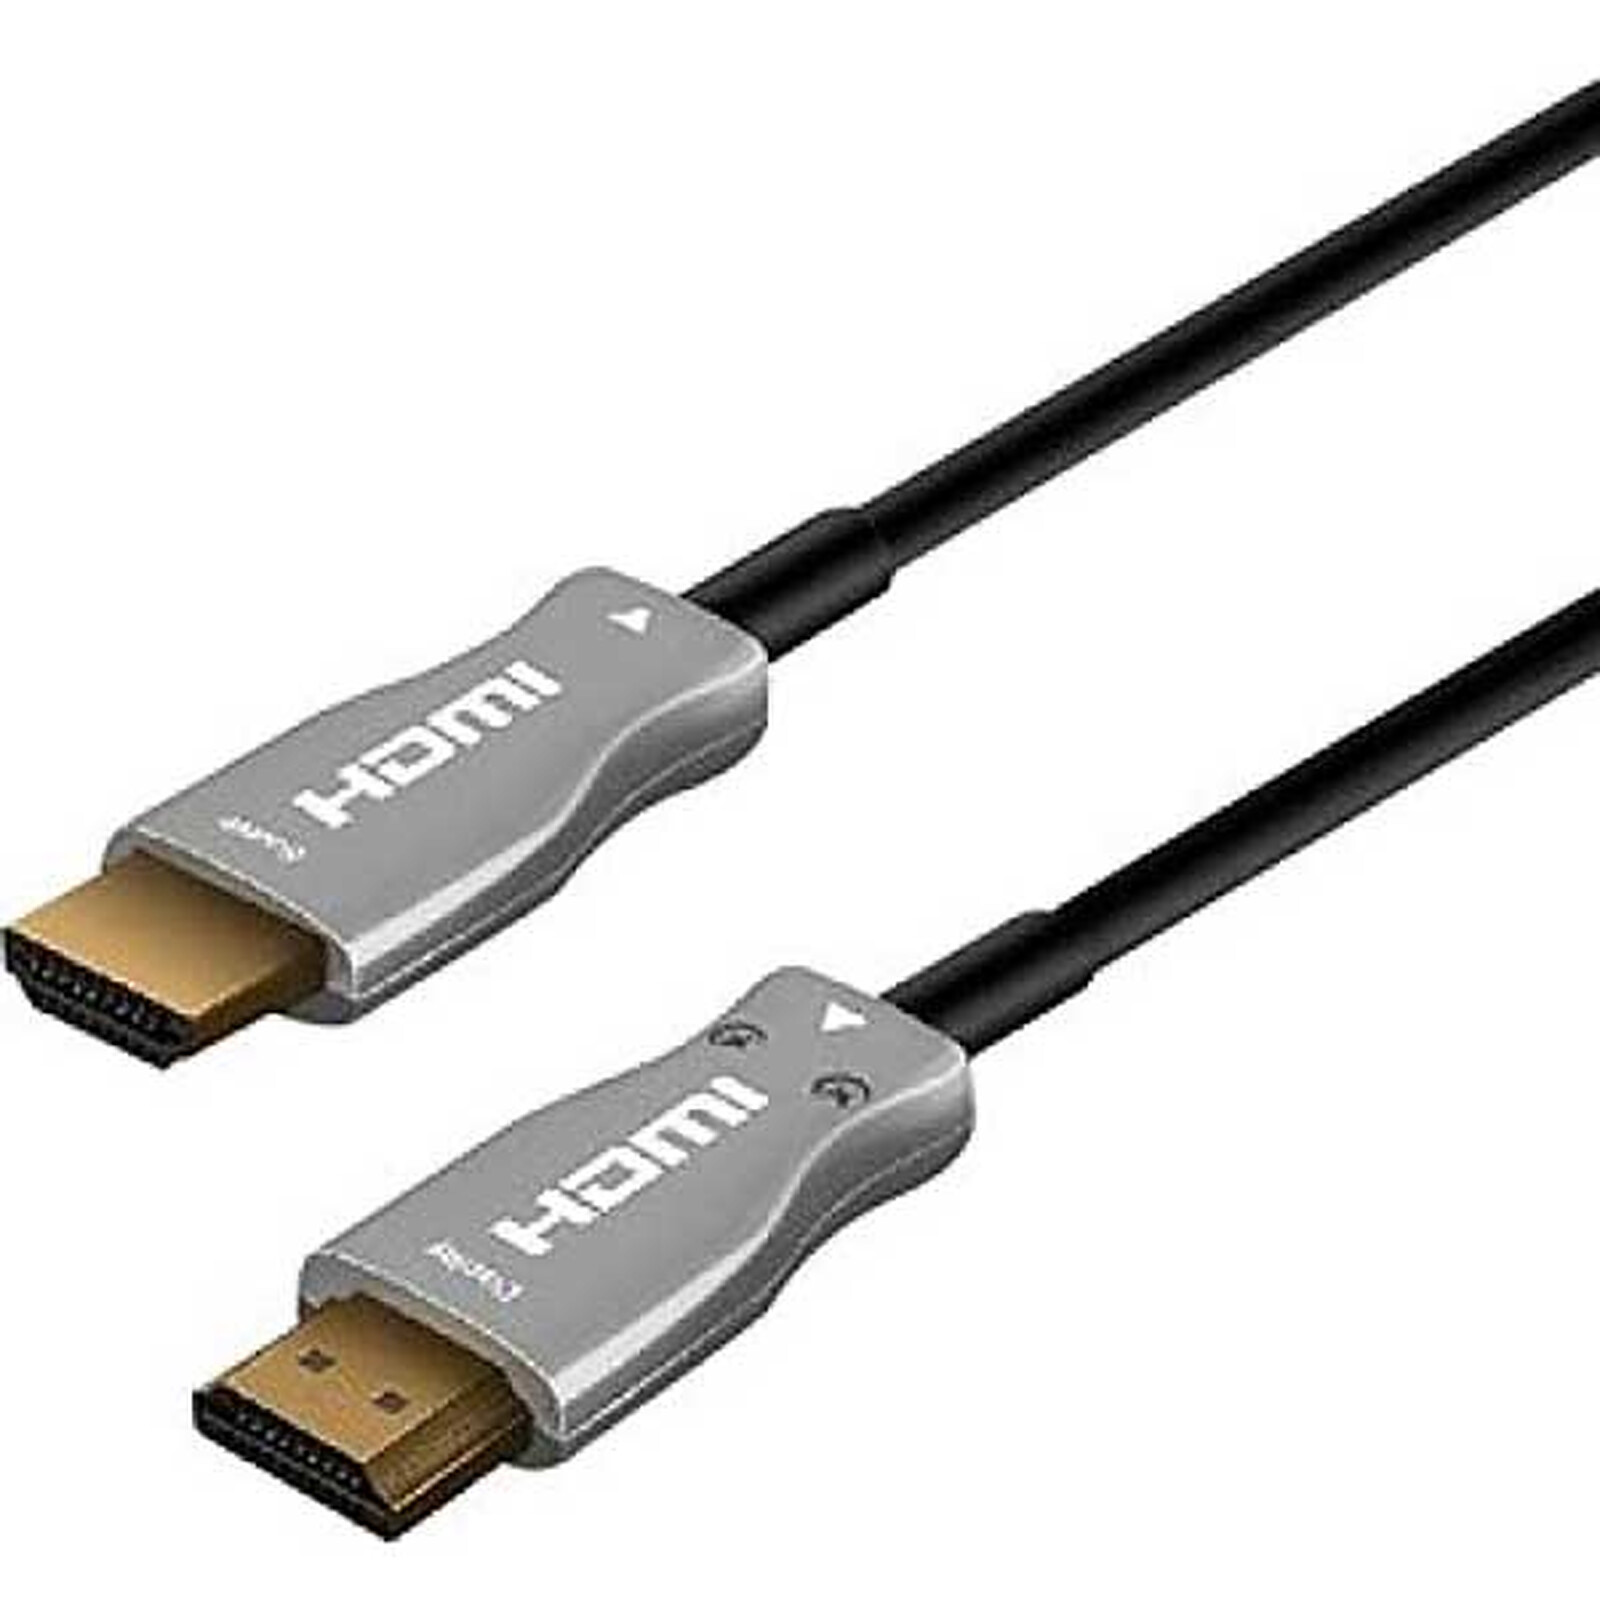 Real Cable HD-OPTIC (10m) - HDMI - Garantie 3 ans LDLC